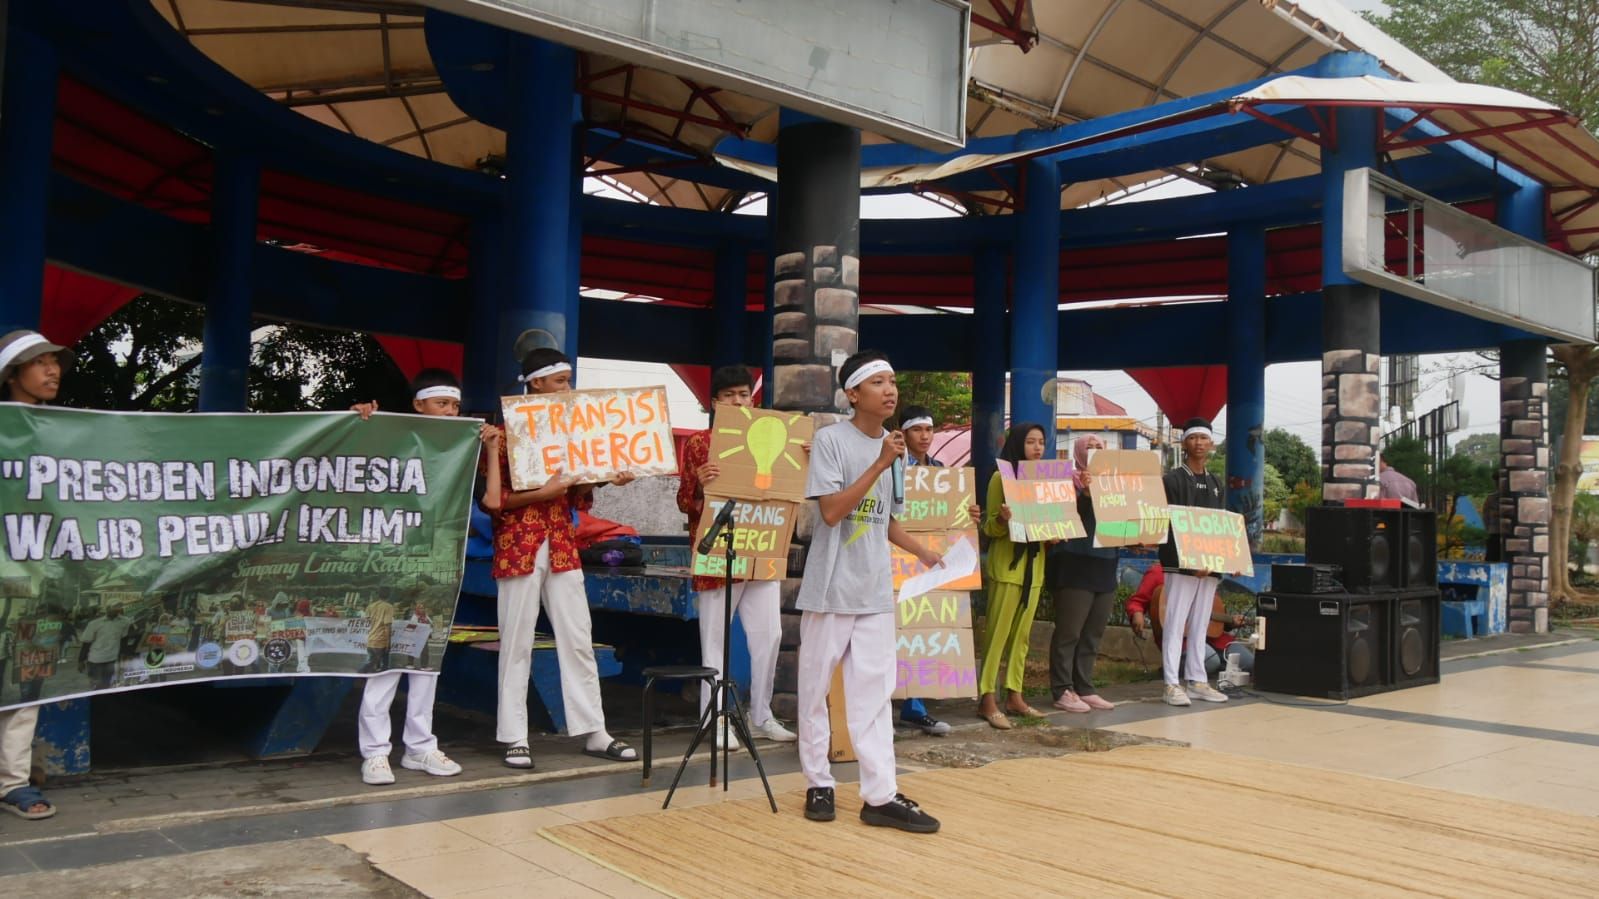  Aktivis berkumpul di Bengkulu menuntut komitmen capres-cawapres atas krisis iklim dan transisi energi berkelanjutan (Istimewa)